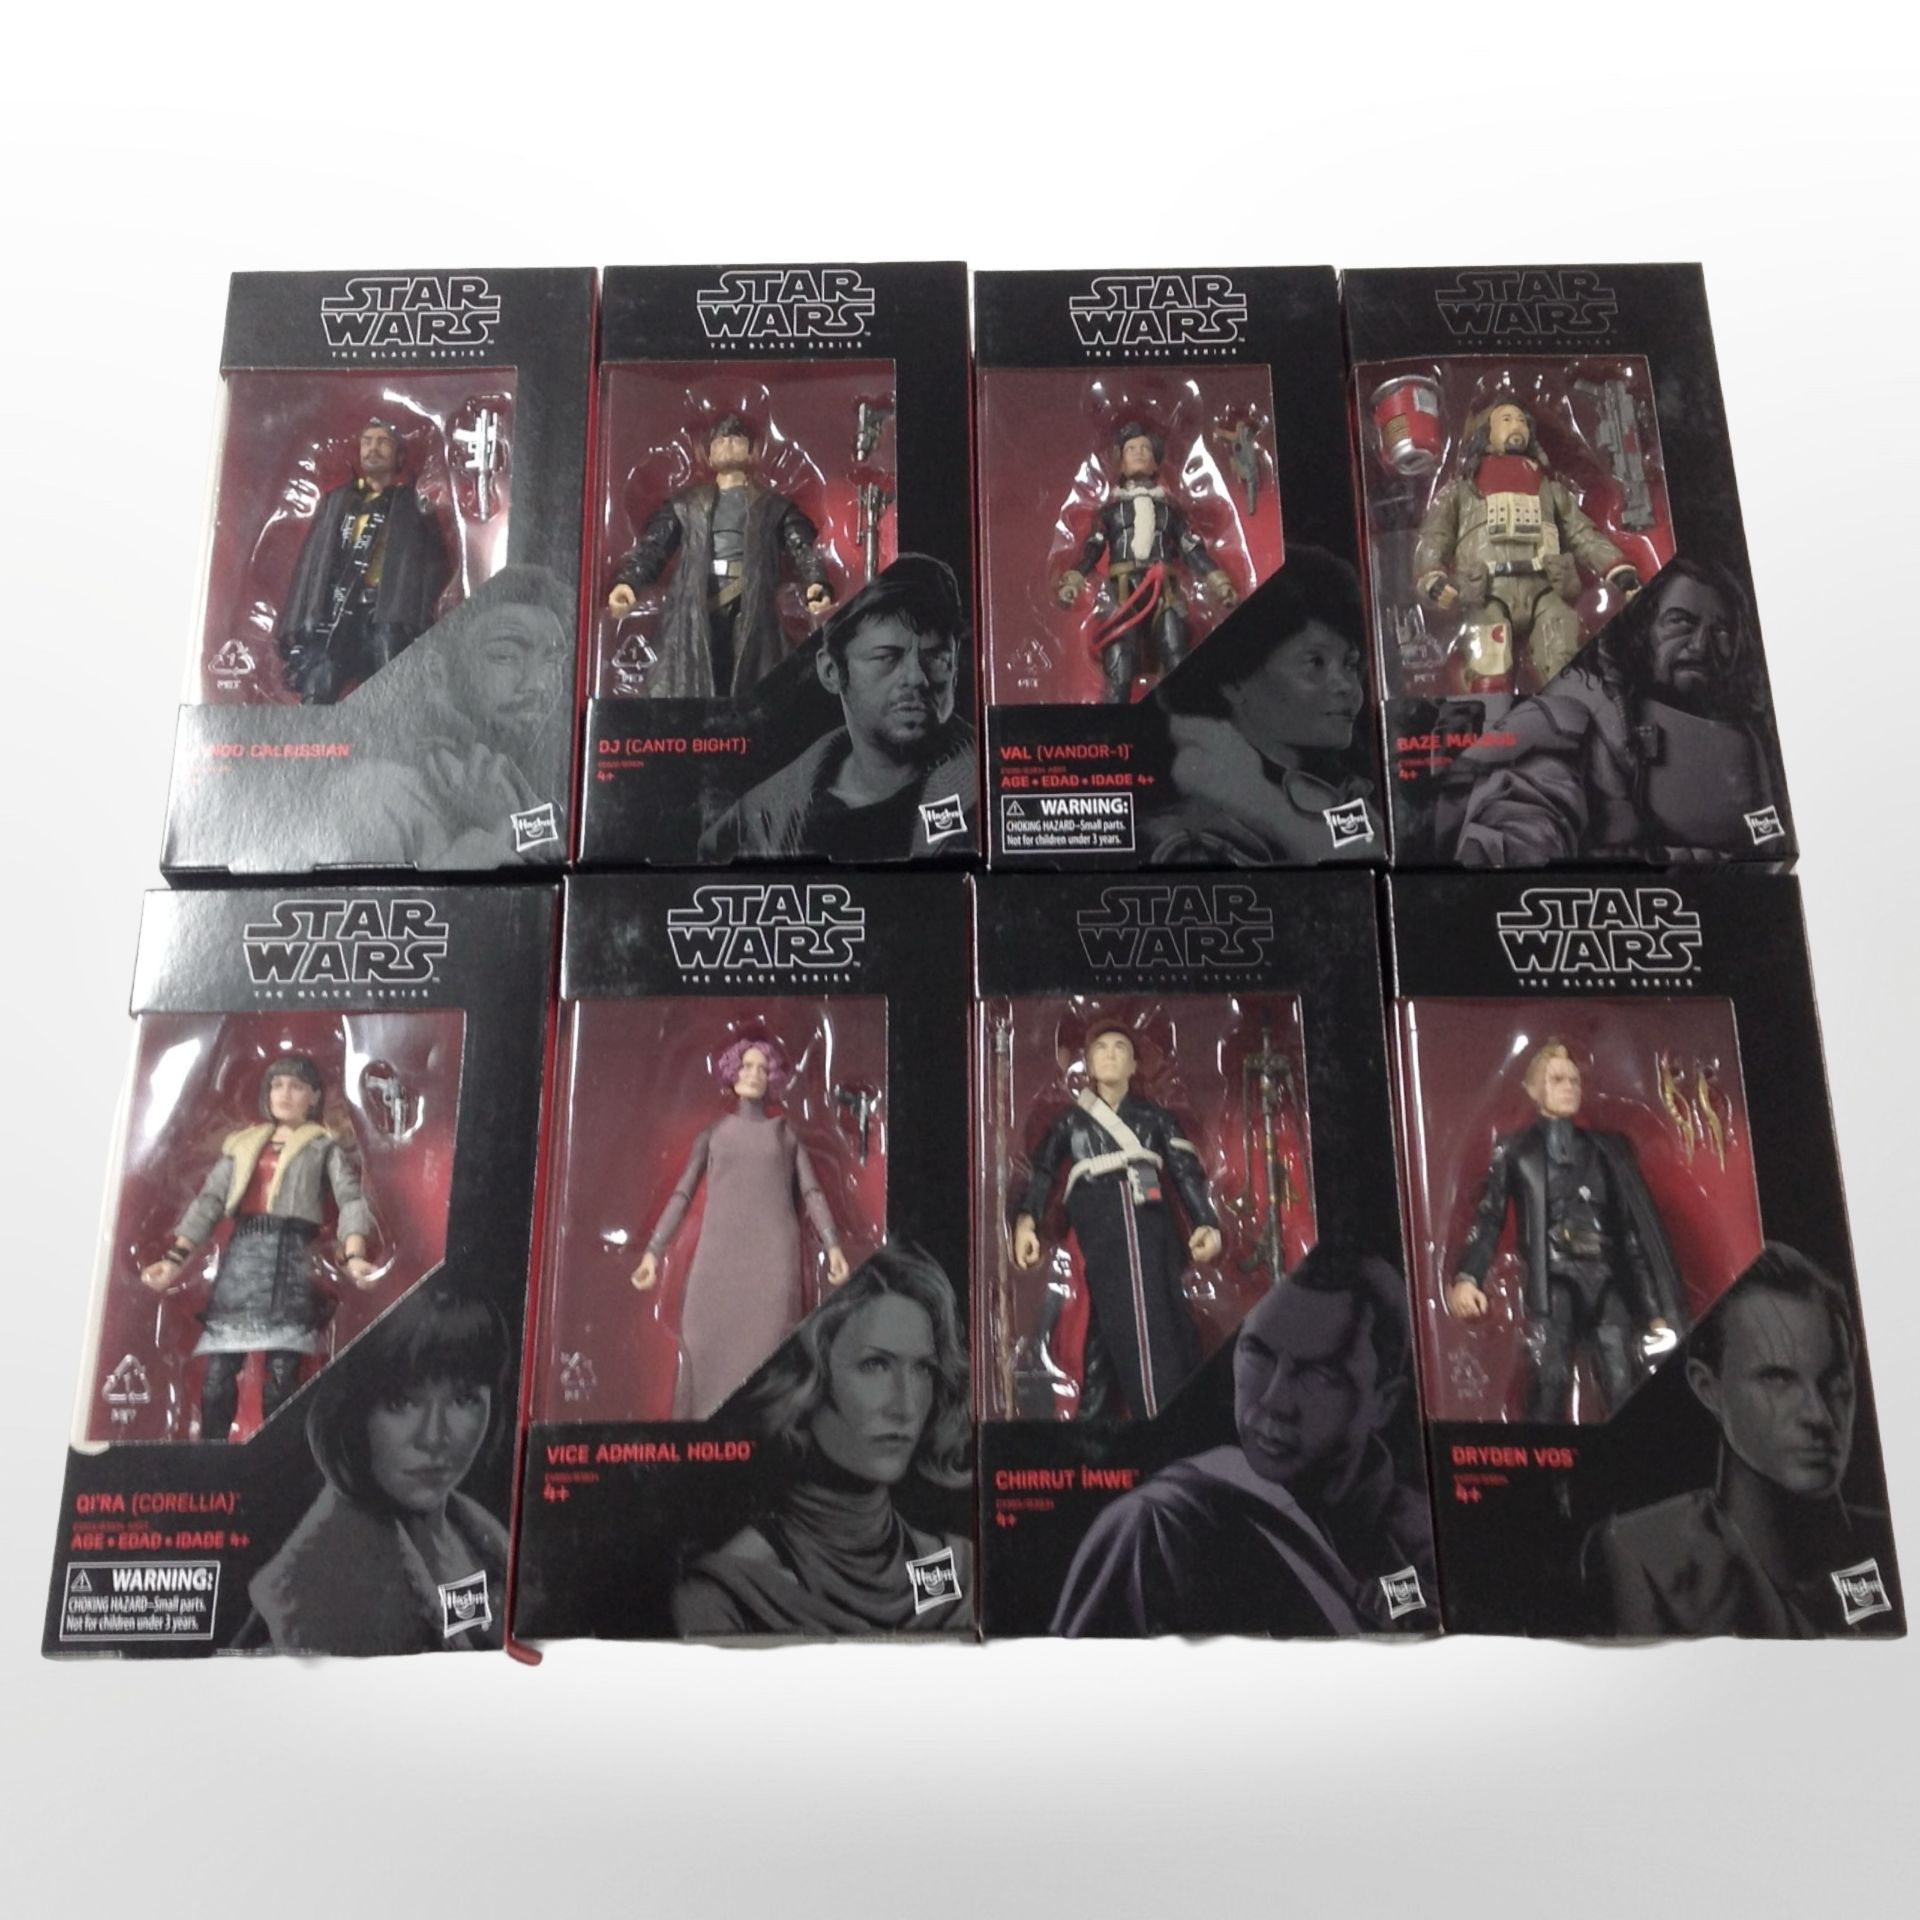 Eight Hasbro Star Wars The Black Series figurines, boxed.